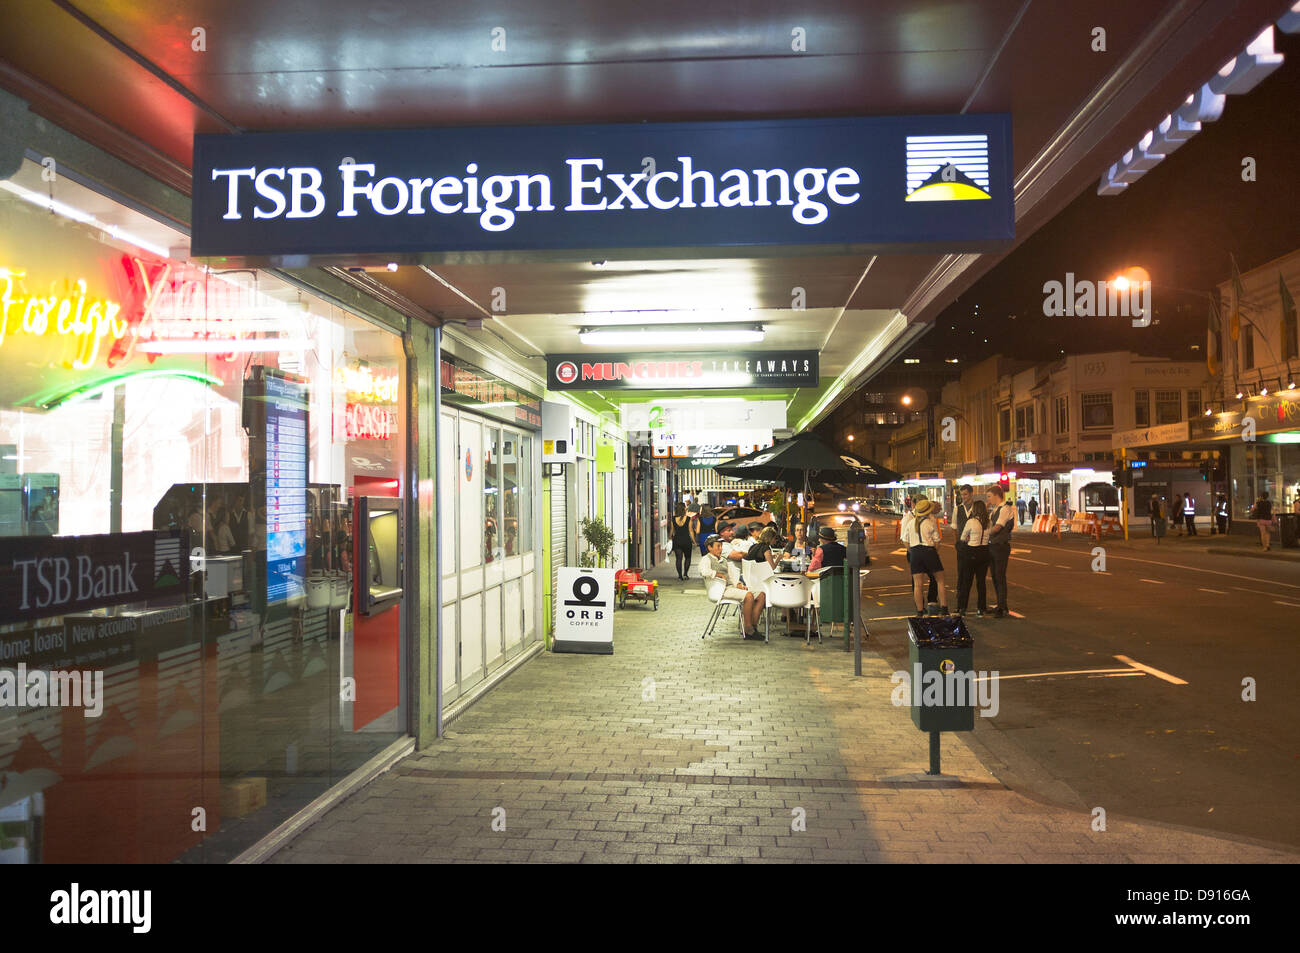 dh street NAPIER NEW ZEALAND Napier street scene TSB foreign Exchange sign Stock Photo